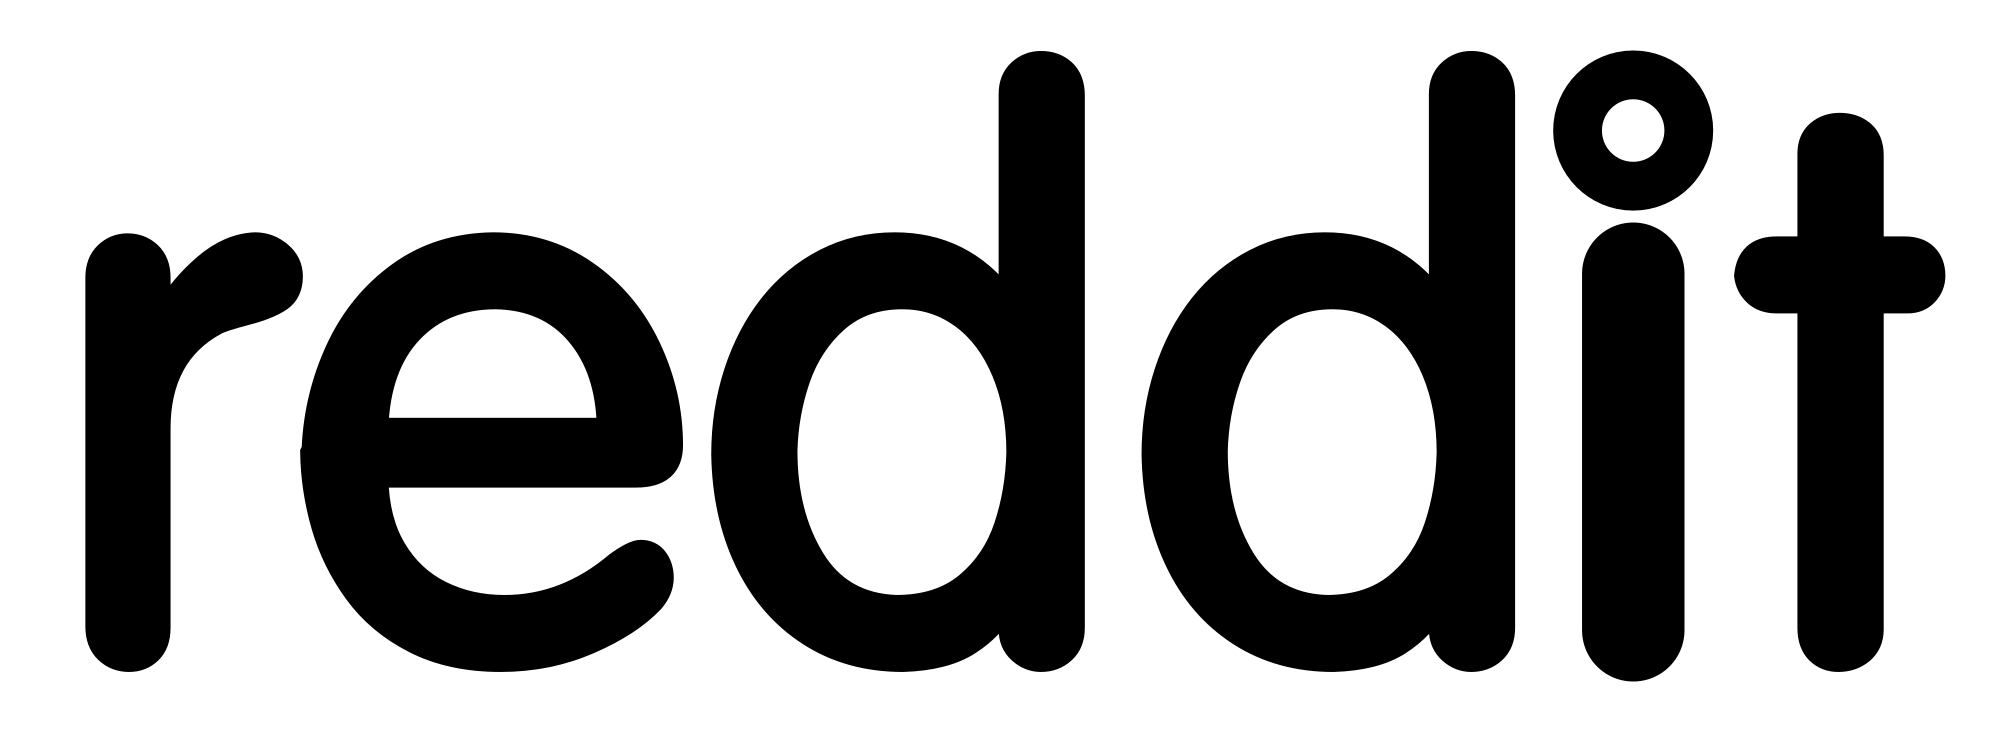 Reddit.com Logo - File:Reddit logo.svg - Wikimedia Commons